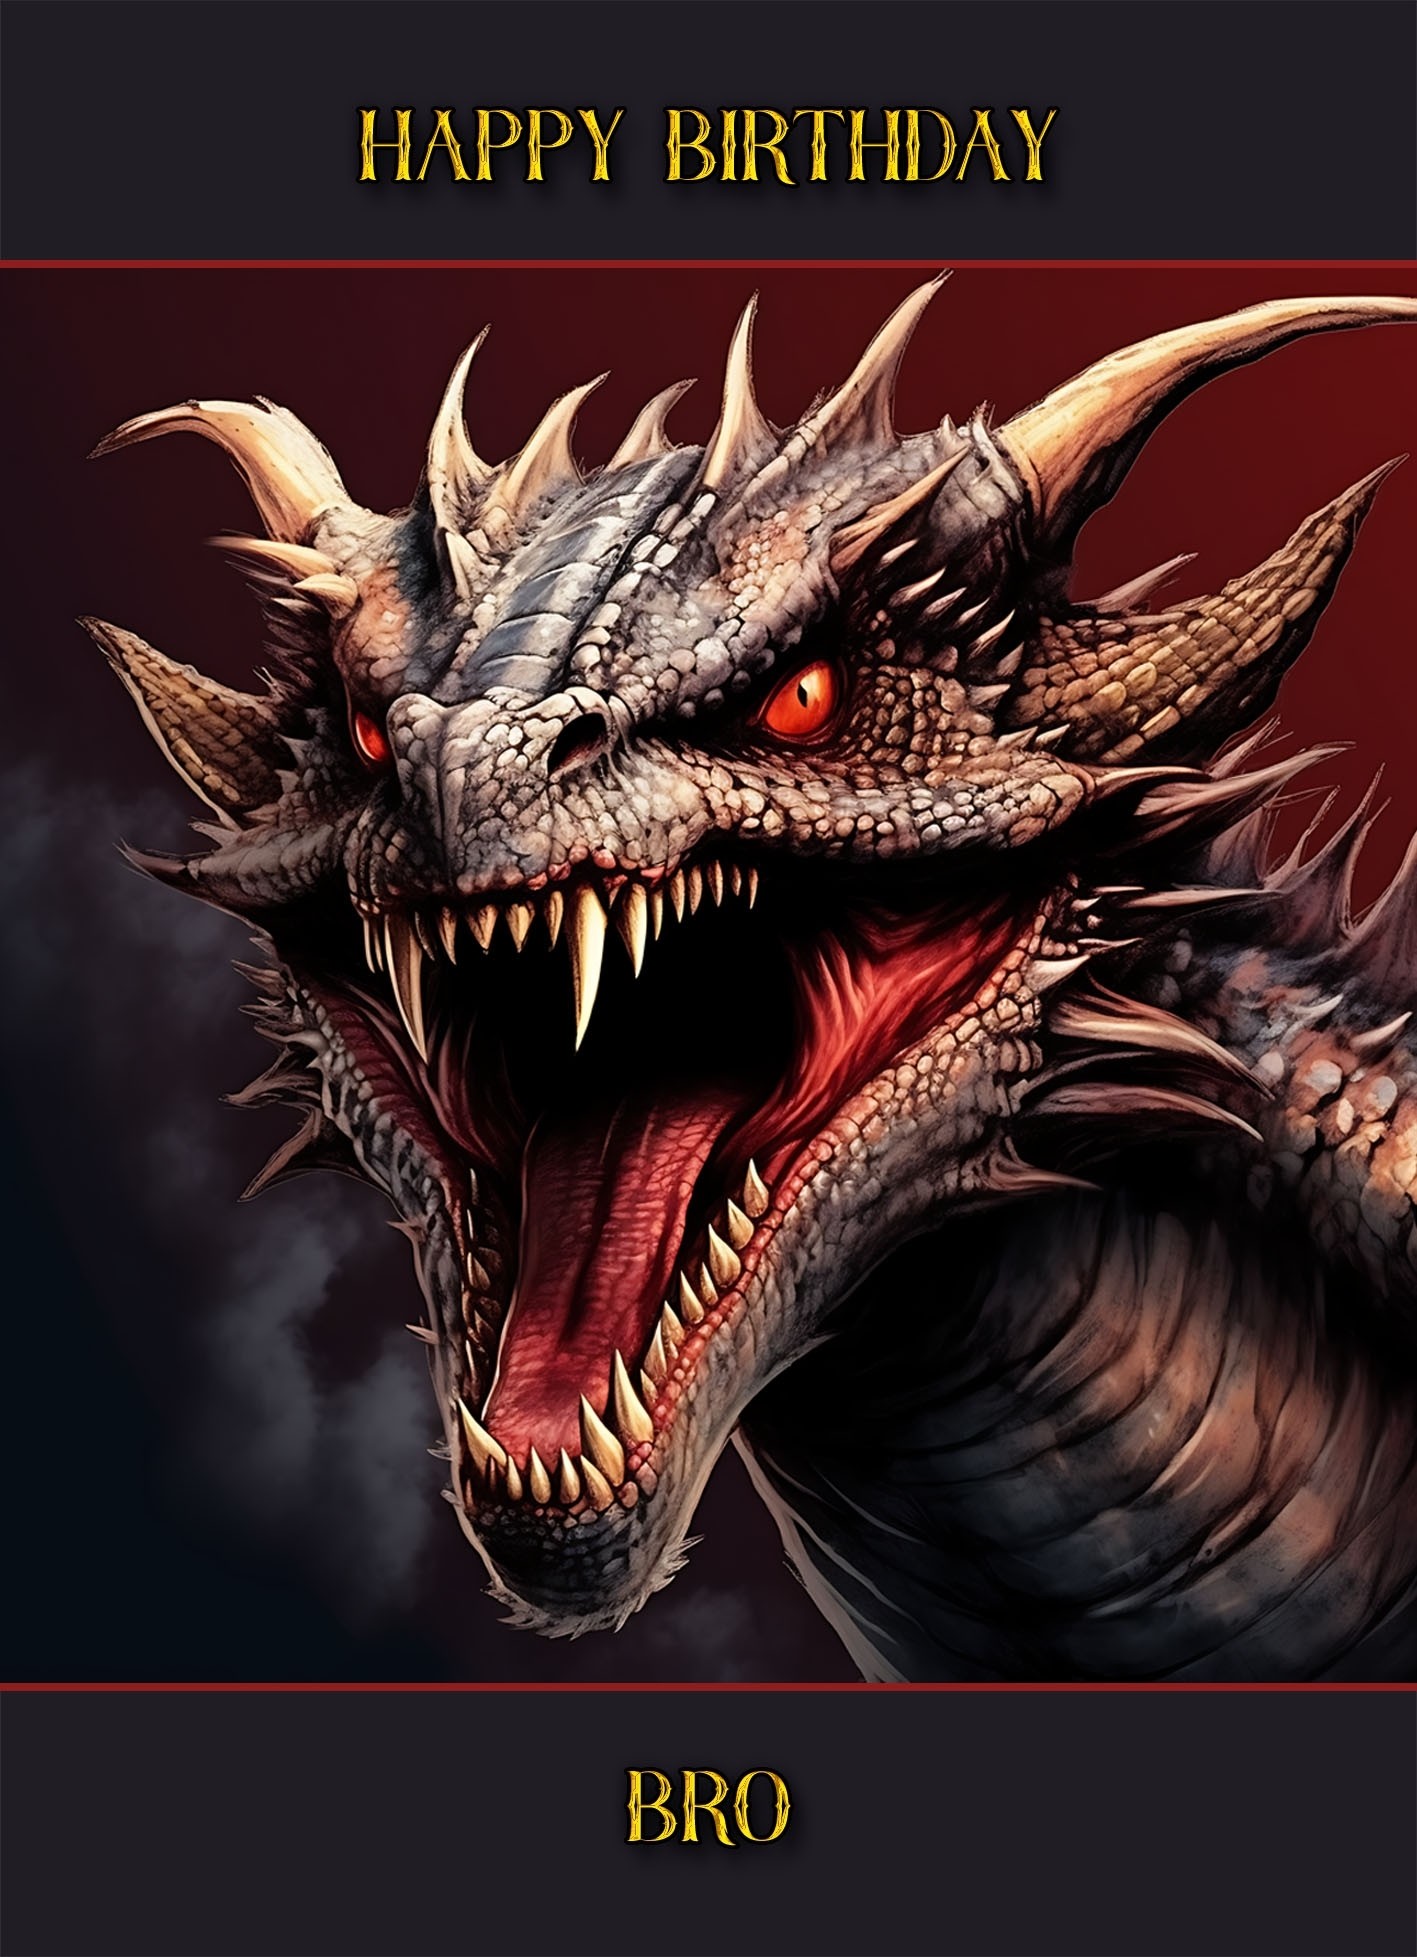 Gothic Fantasy Dragon Birthday Card For Bro (Design 2)